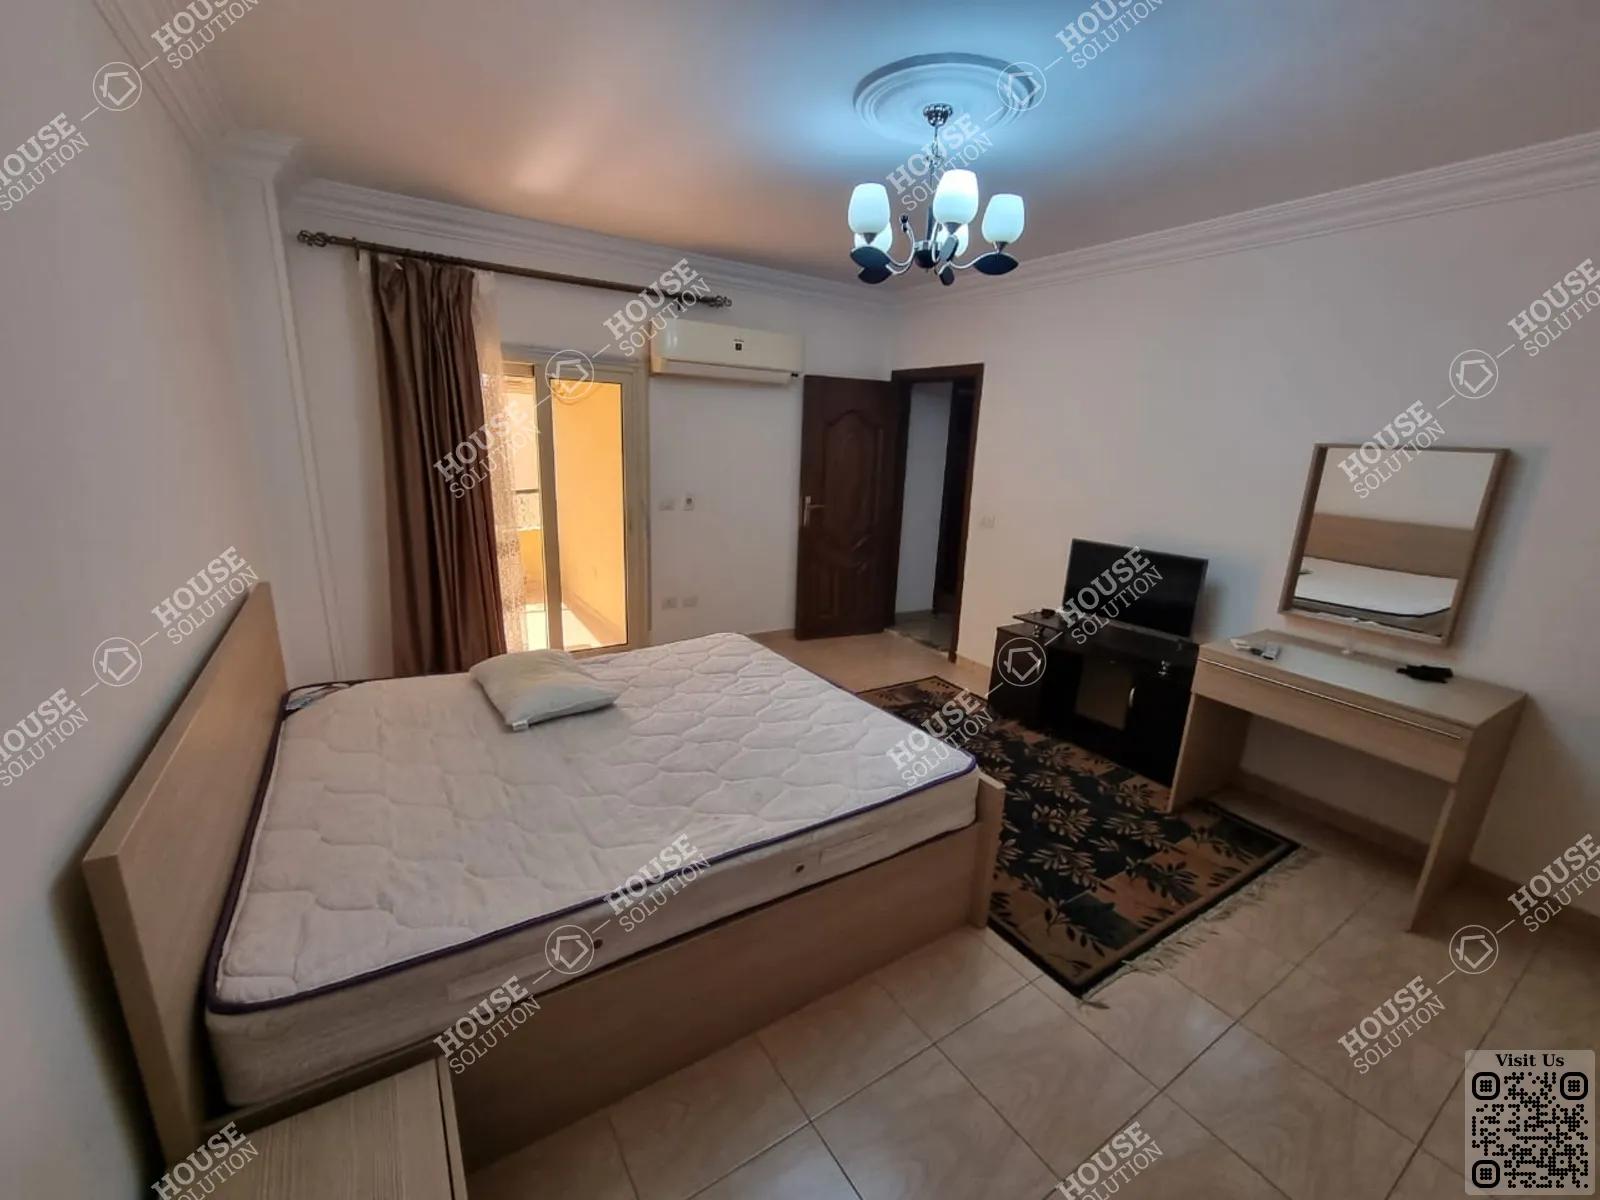 THIRD BEDROOM  @ Apartments For Rent In Maadi Maadi Sarayat Area: 175 m² consists of 3 Bedrooms 2 Bathrooms Modern furnished 5 stars #5601-1